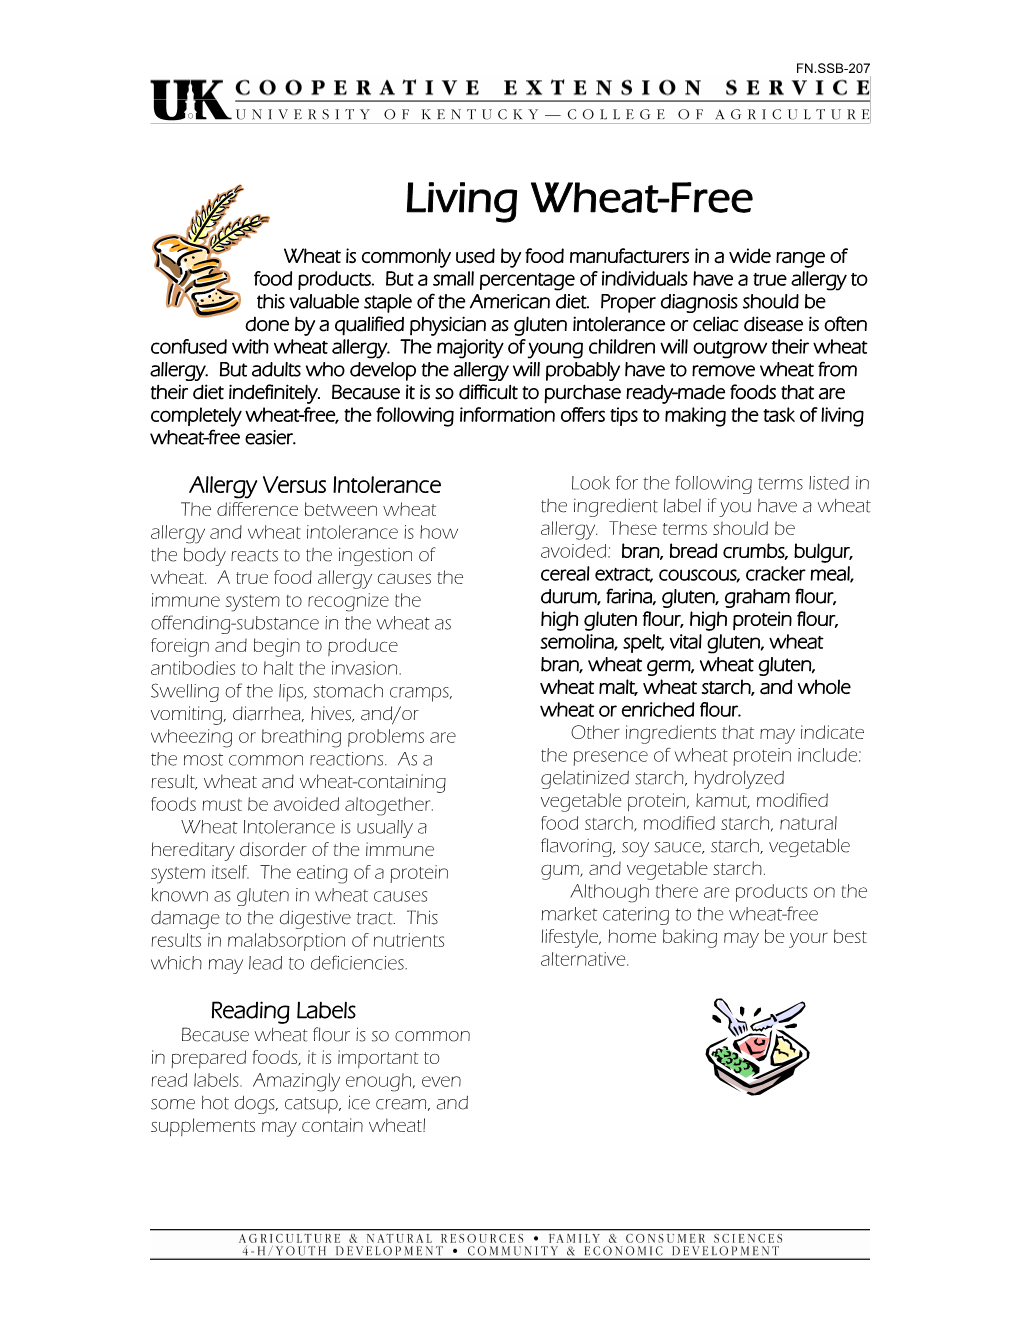 Wheat Allergies